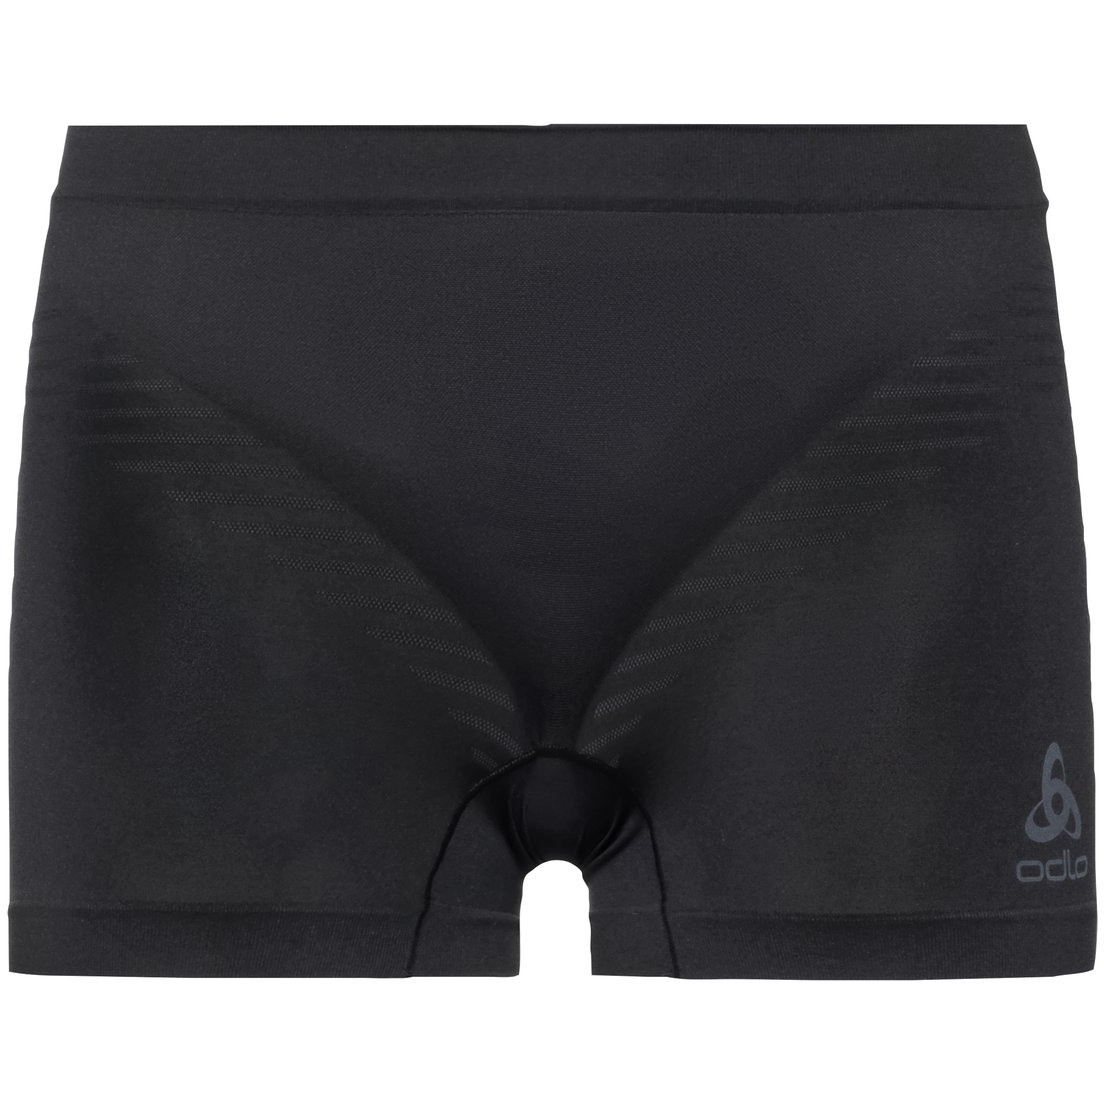 Produktbild von Odlo Performance X-Light Panty Damen - schwarz